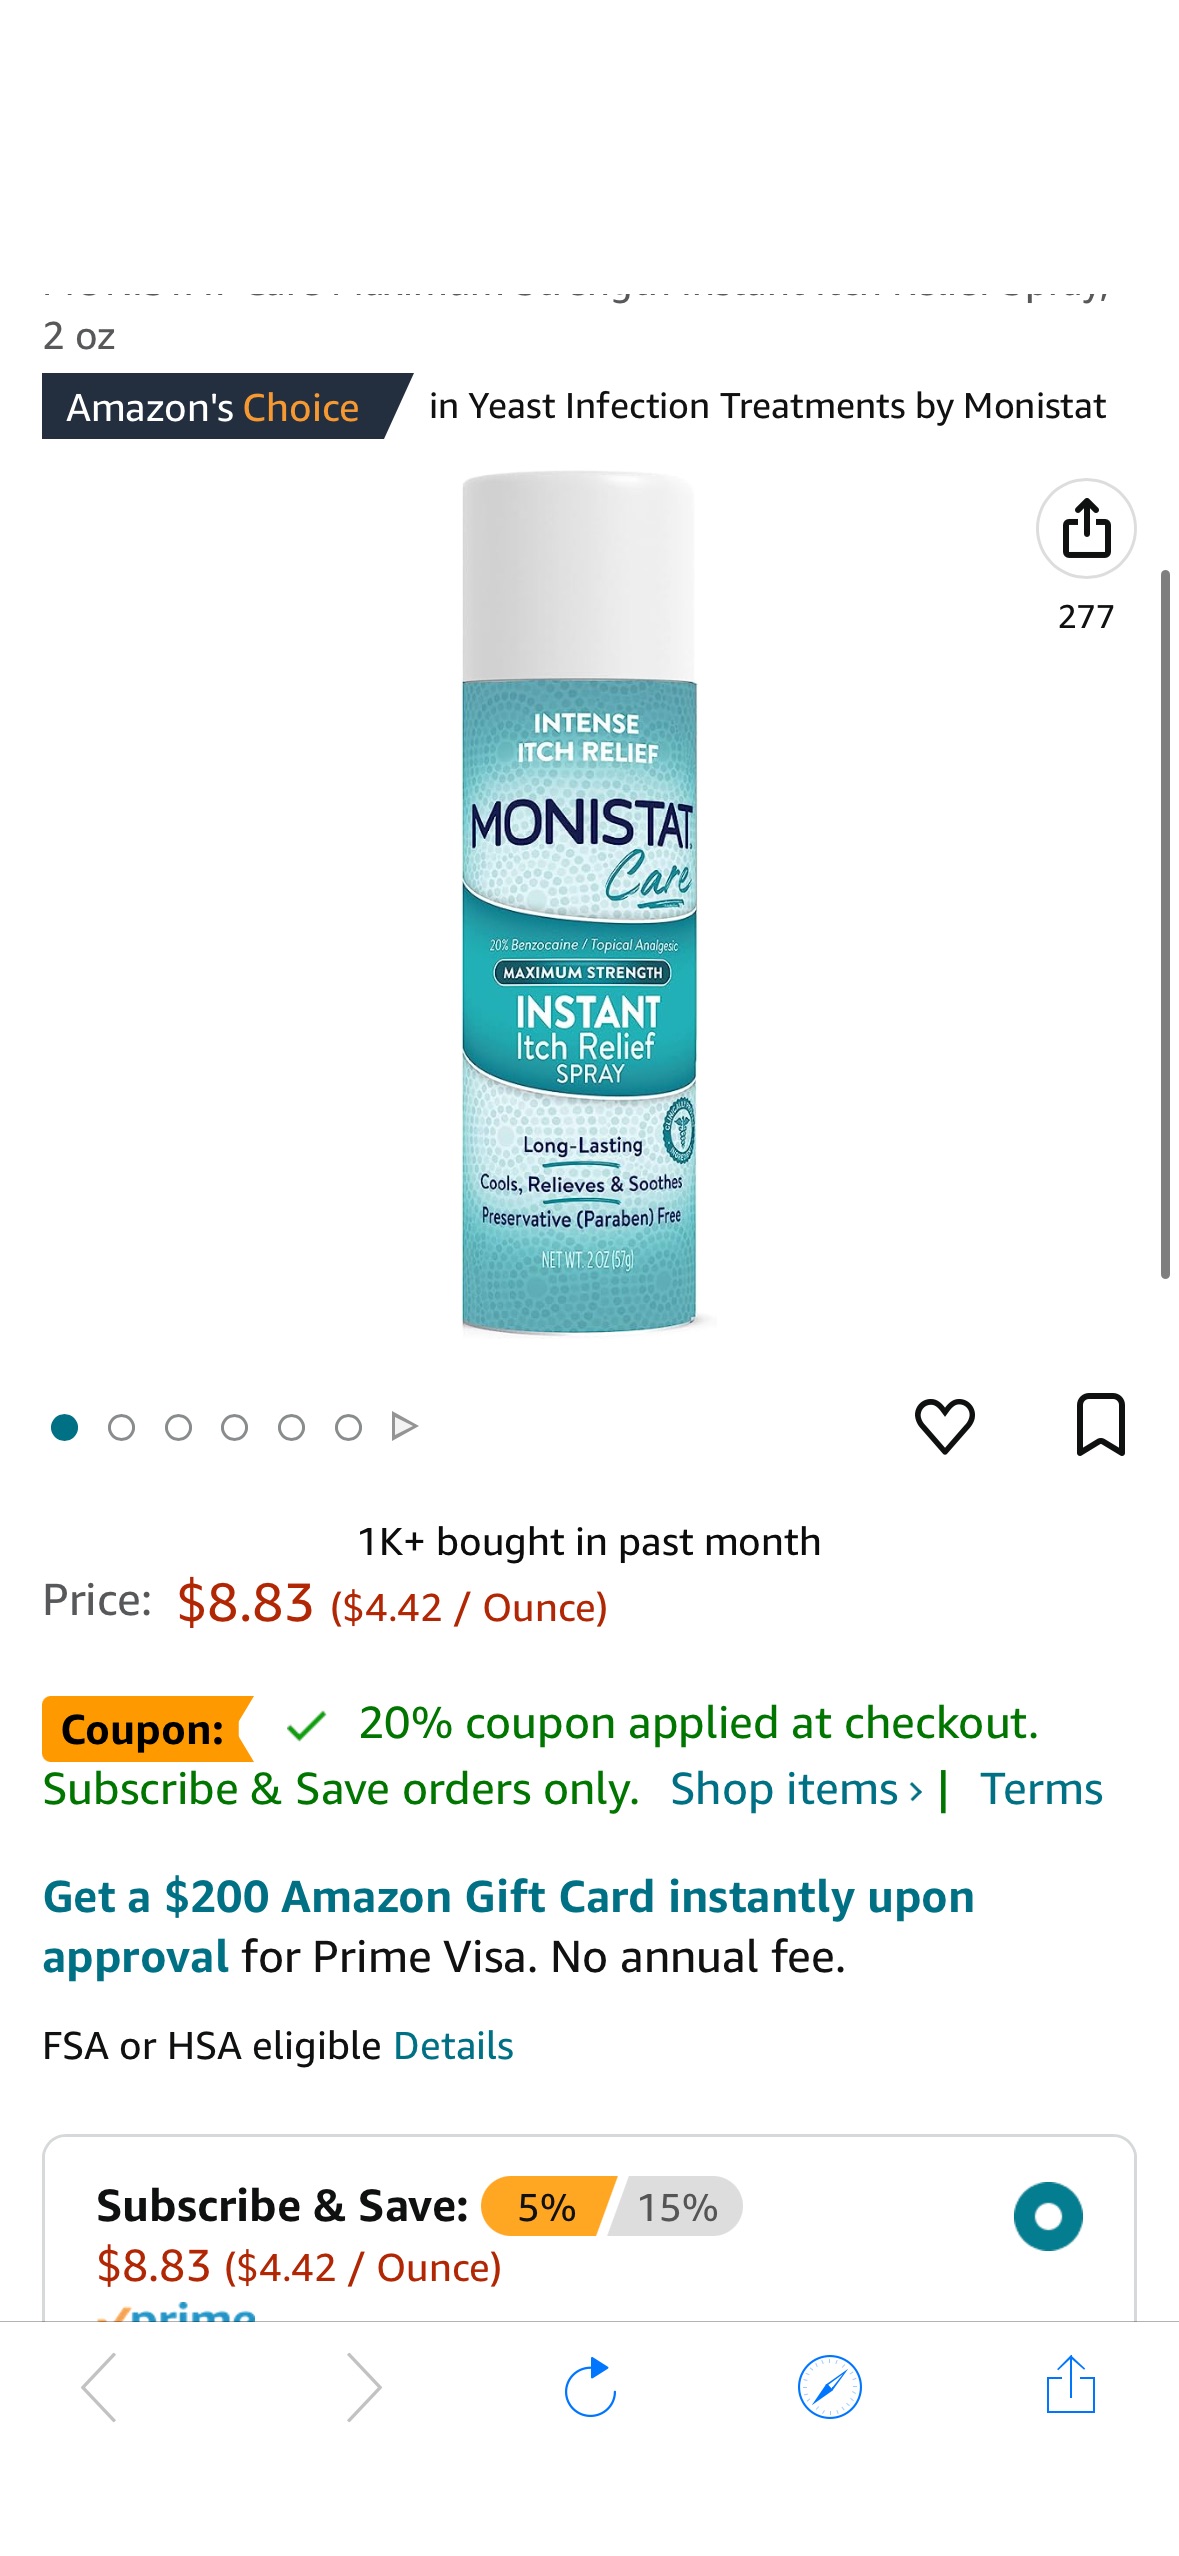 Amazon.com: MONISTAT Care Maximum Strength Instant Itch Relief Spray, 2 oz : Health & Household